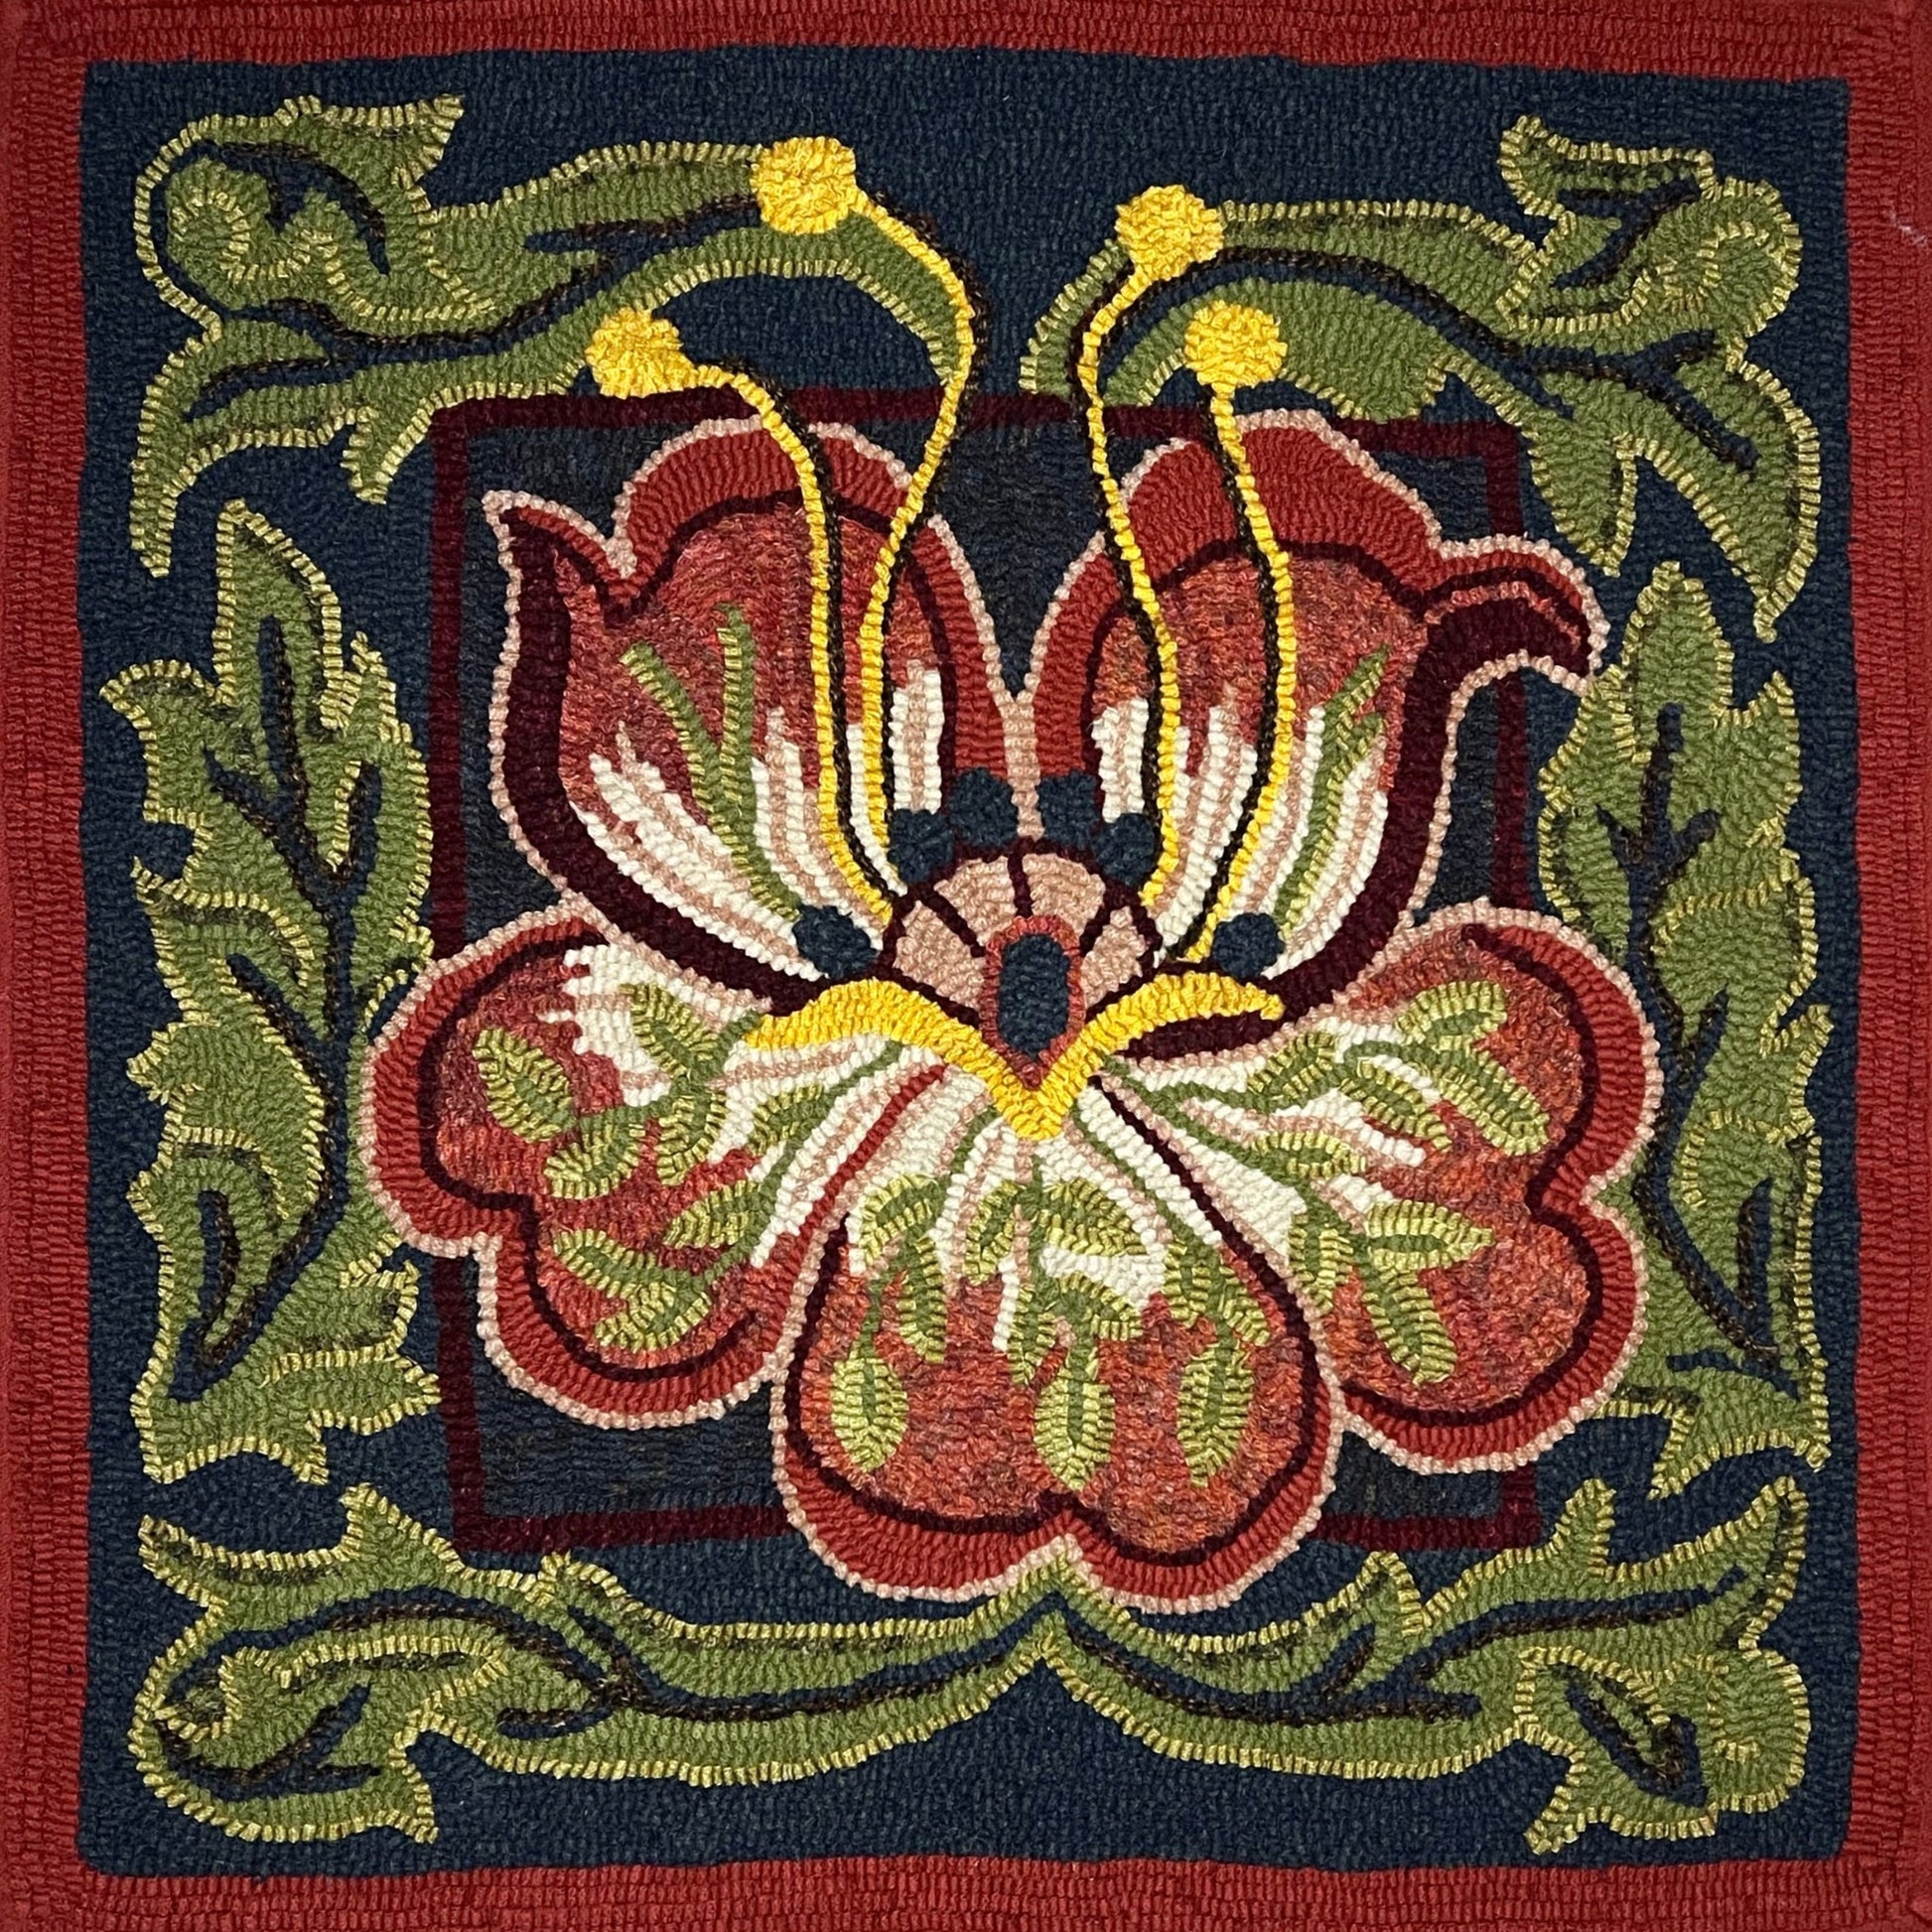  Arise-Rug Hooking Pattern, PDF Digital Download Pattern, Beautiful Floral Design by Orphaned Wool